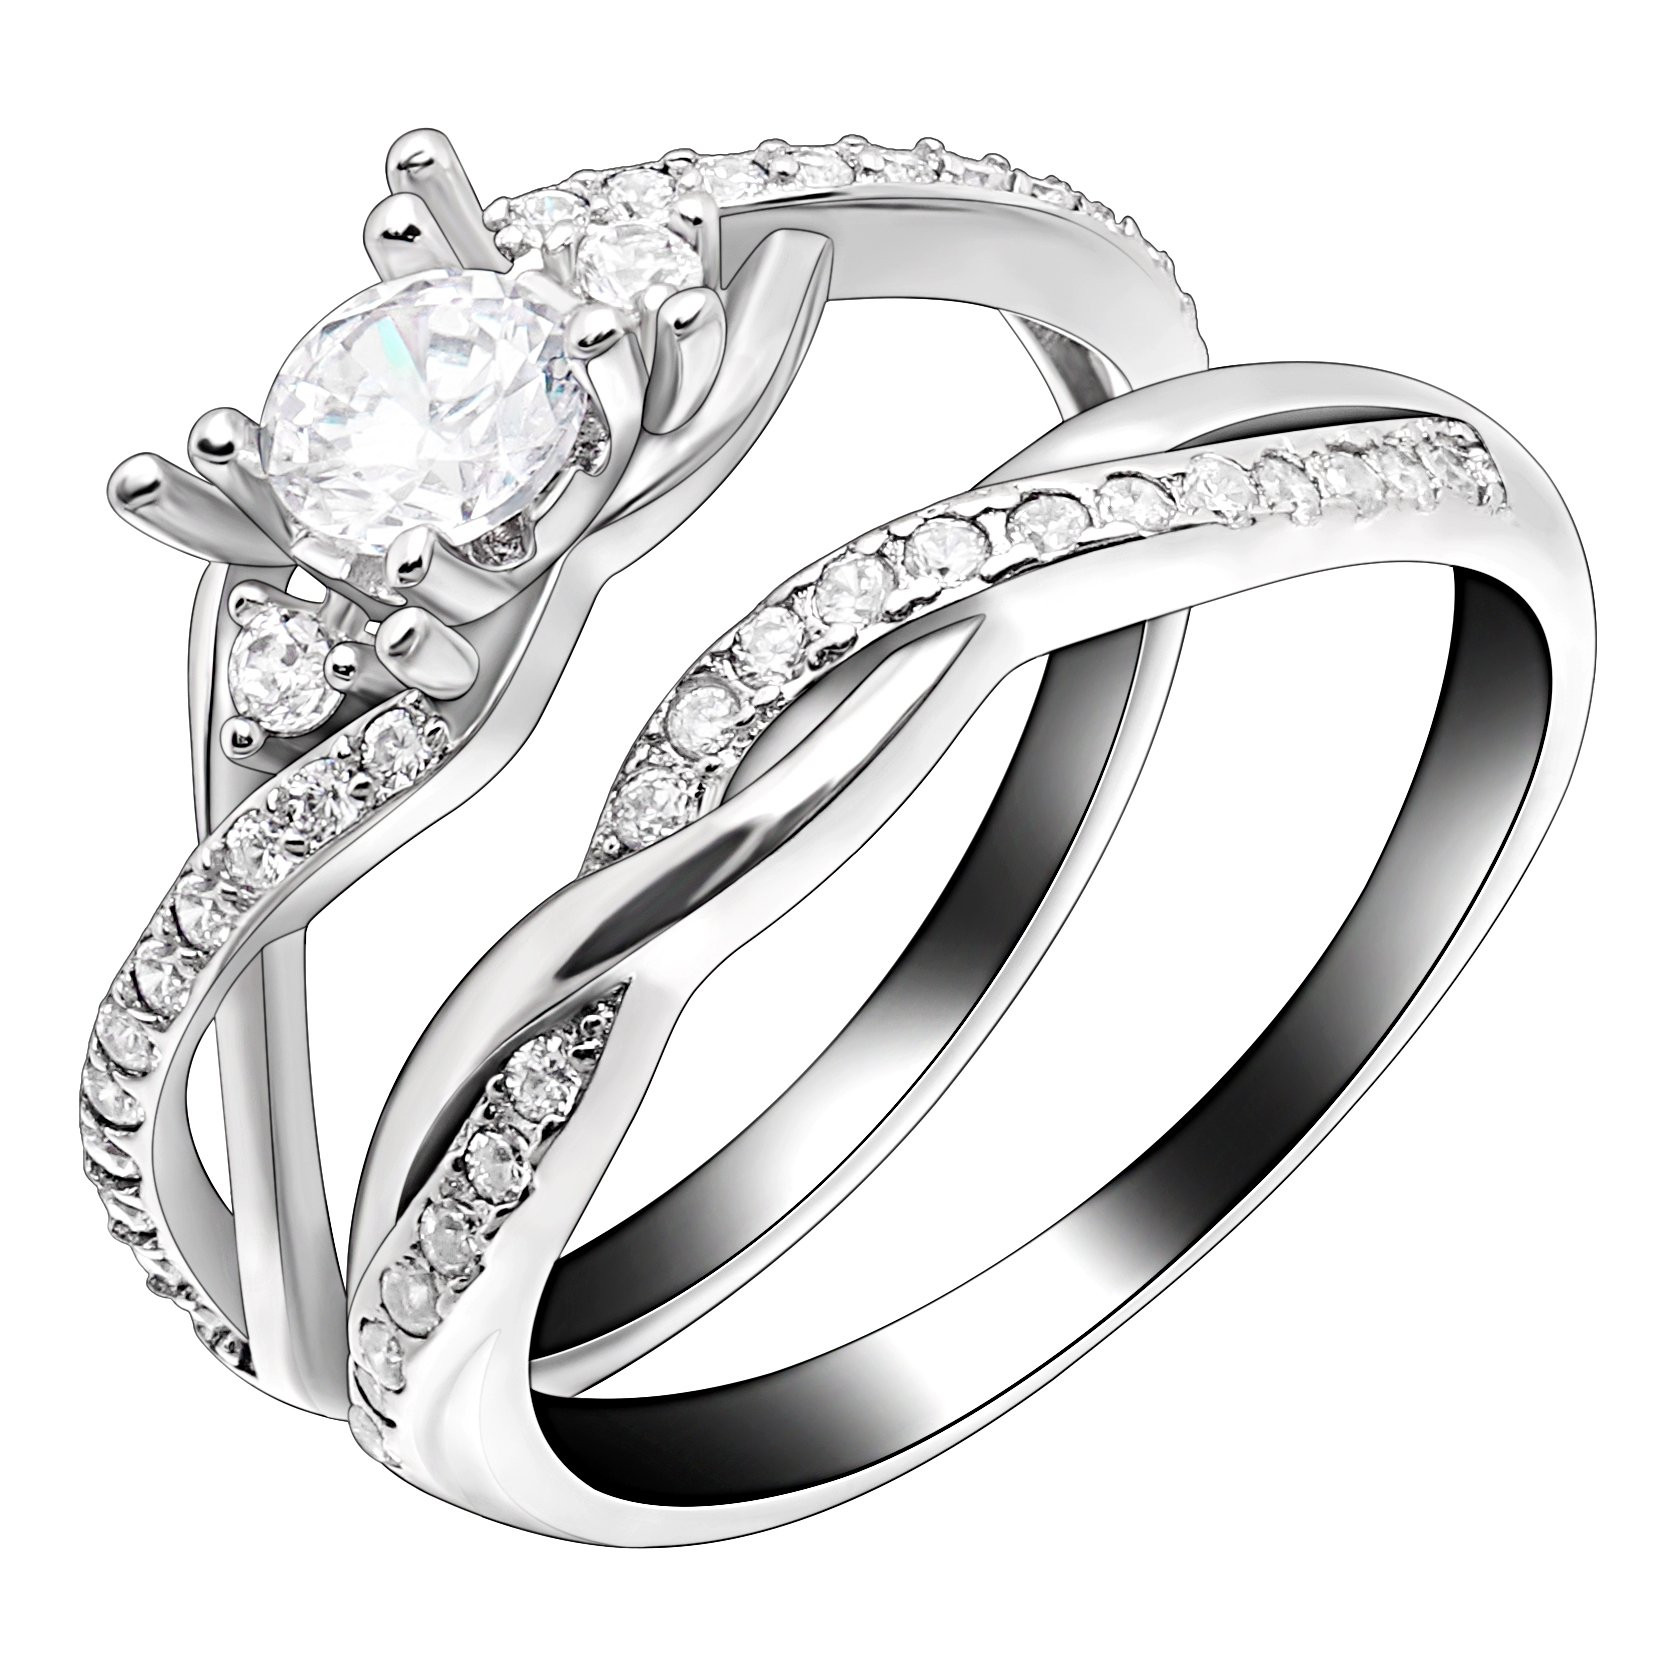 Wedding Rings Sets At Walmart
 Contessa Engagement and Wedding Band Ring Set 925 Sterling